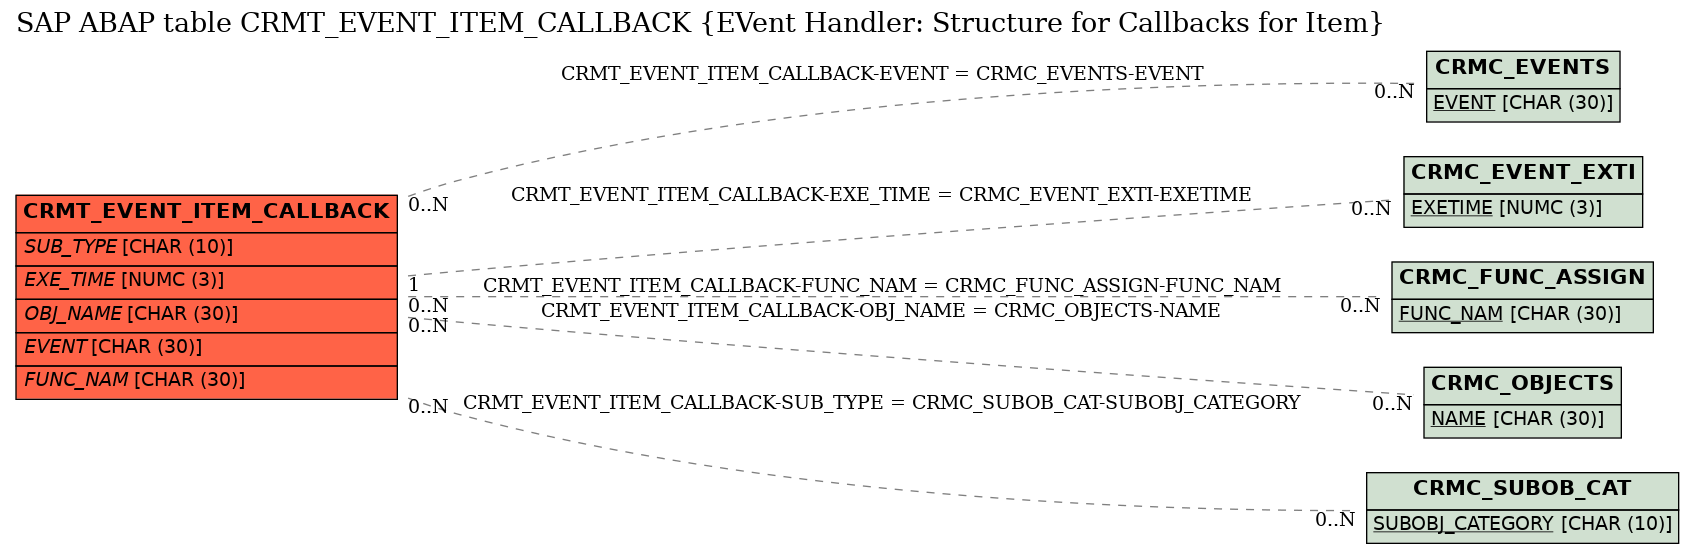 E-R Diagram for table CRMT_EVENT_ITEM_CALLBACK (EVent Handler: Structure for Callbacks for Item)